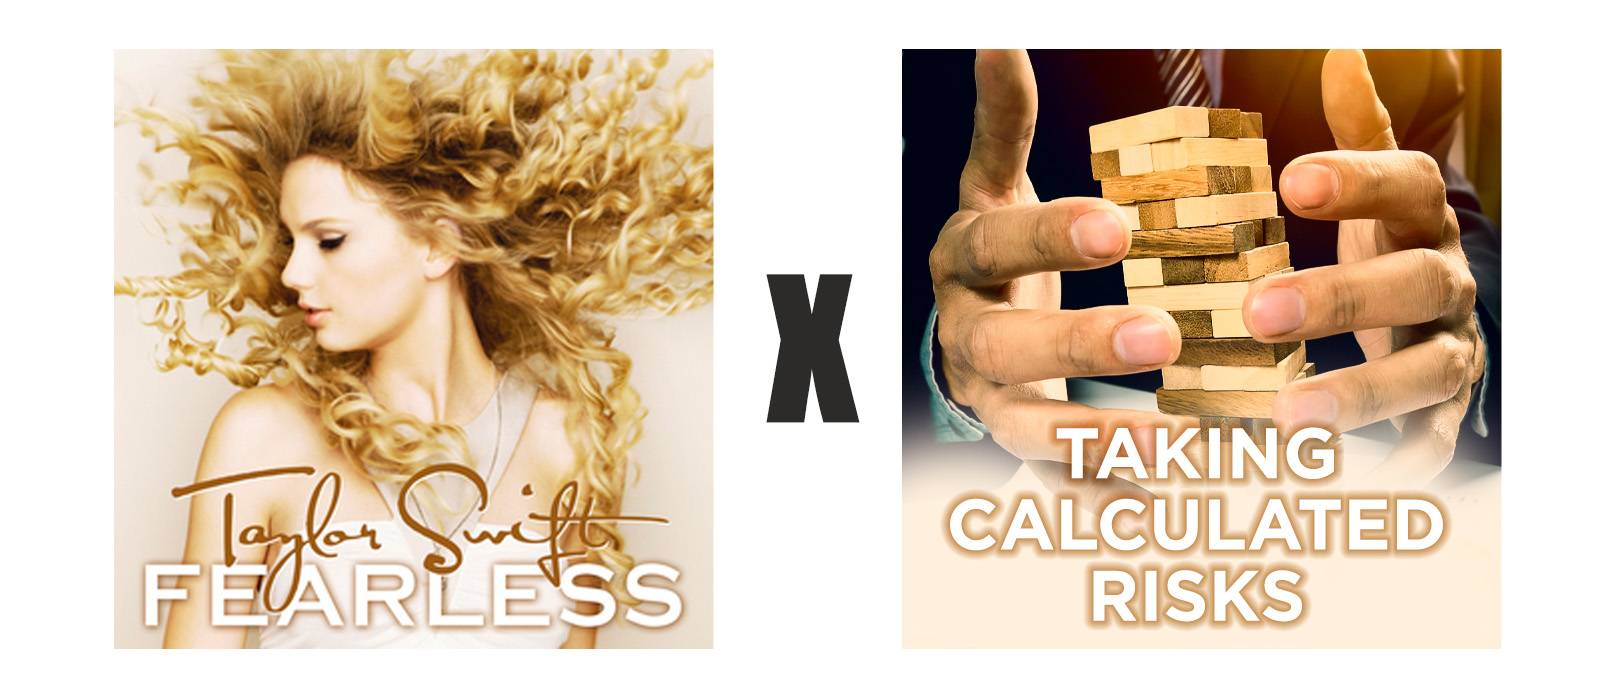 Taylor Swift Fearless x Tomando riesgos calculados_